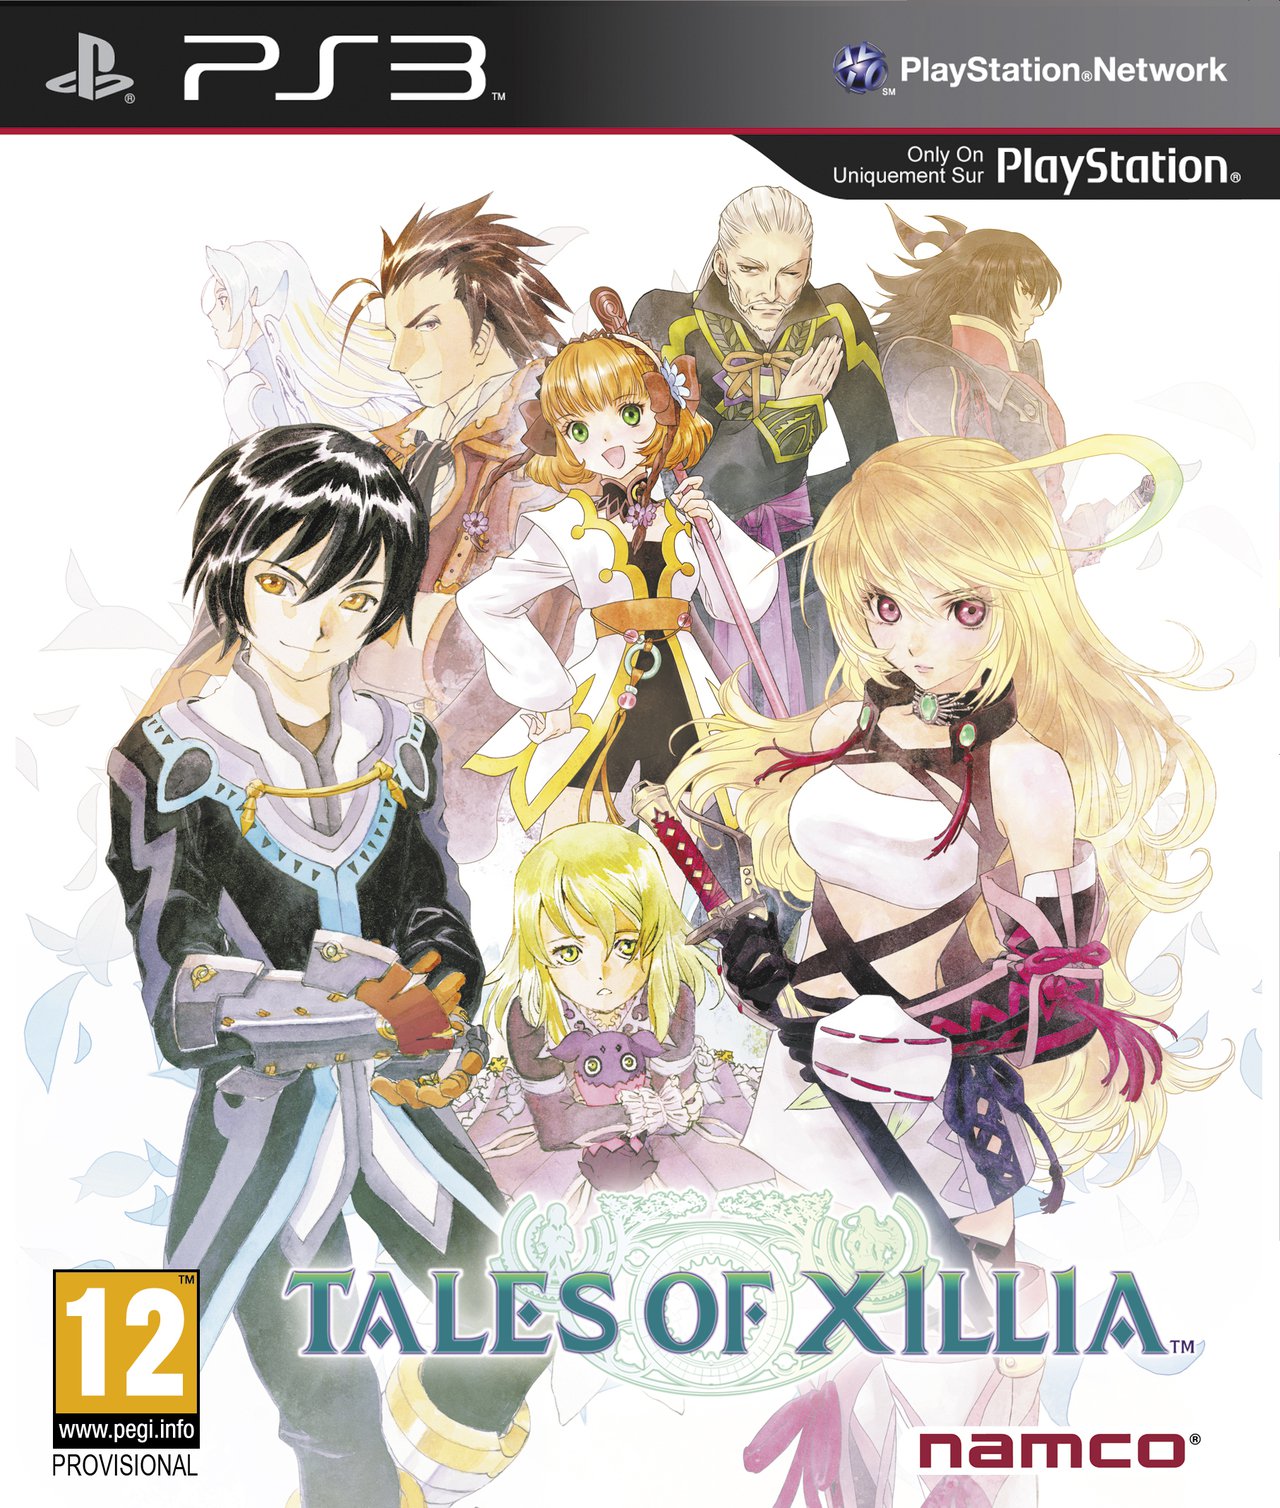 Caratula de Tales of Xillia para PlayStation 3